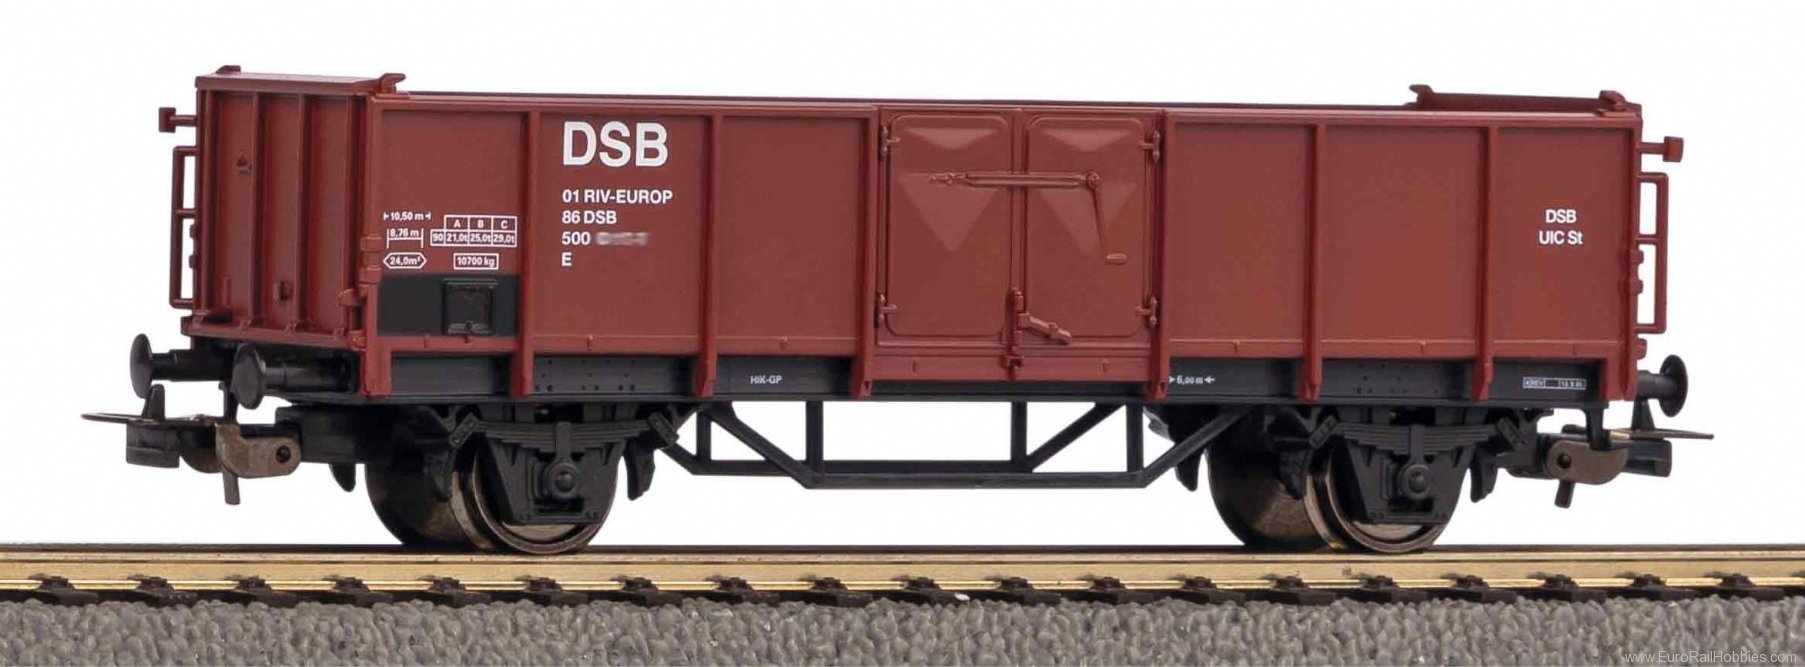 Piko 24529 Elo DSB IV open freight wagon (Piko Classic N